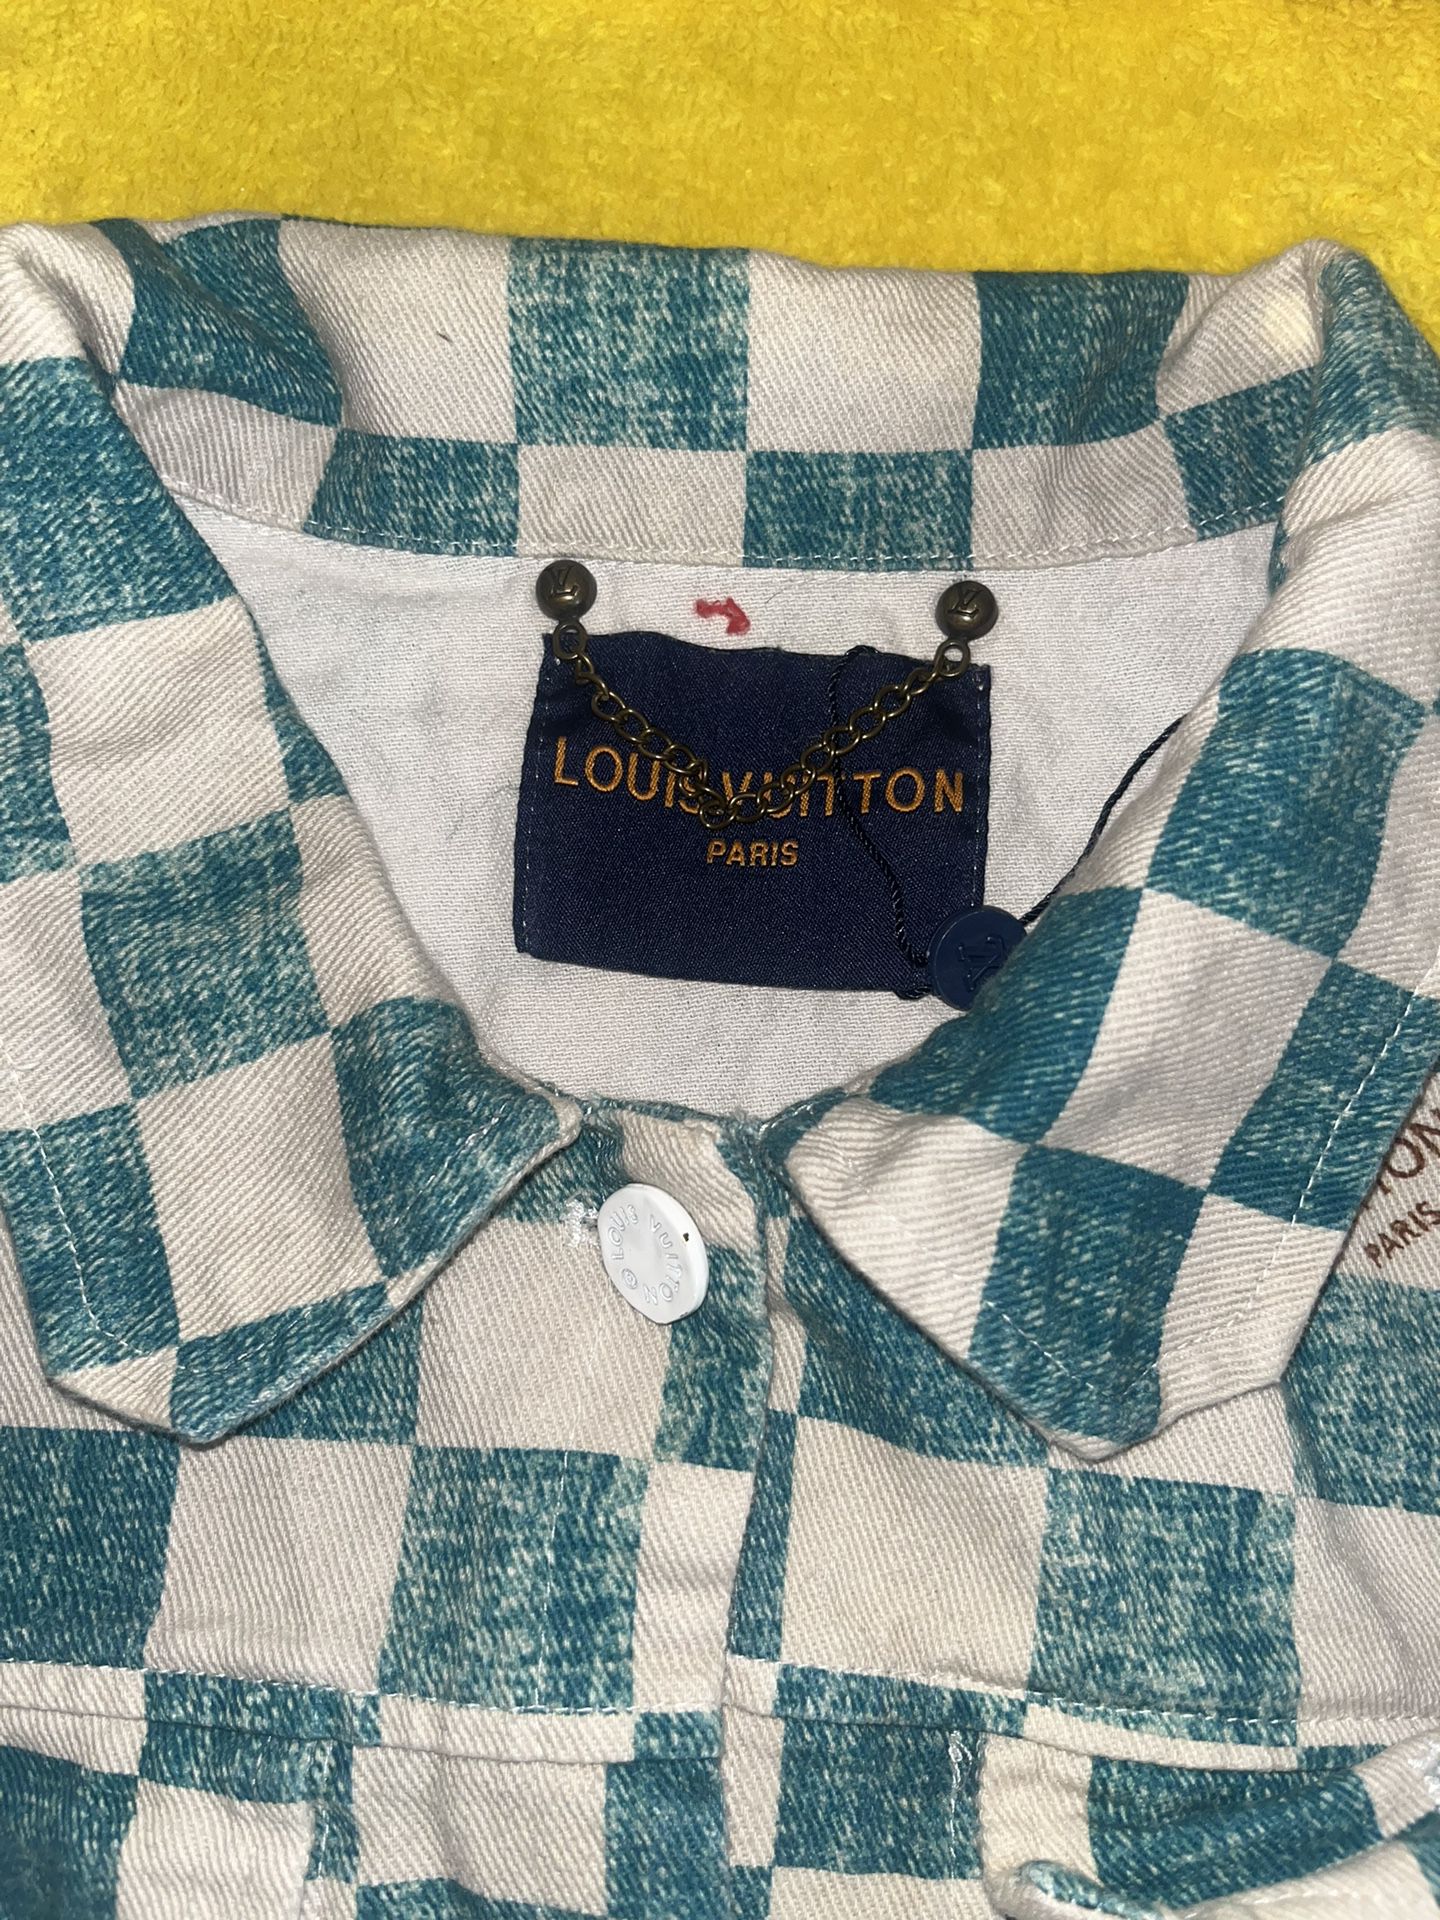 Louis Vuitton Jean Jacket for Sale in New Port Richey, FL - OfferUp